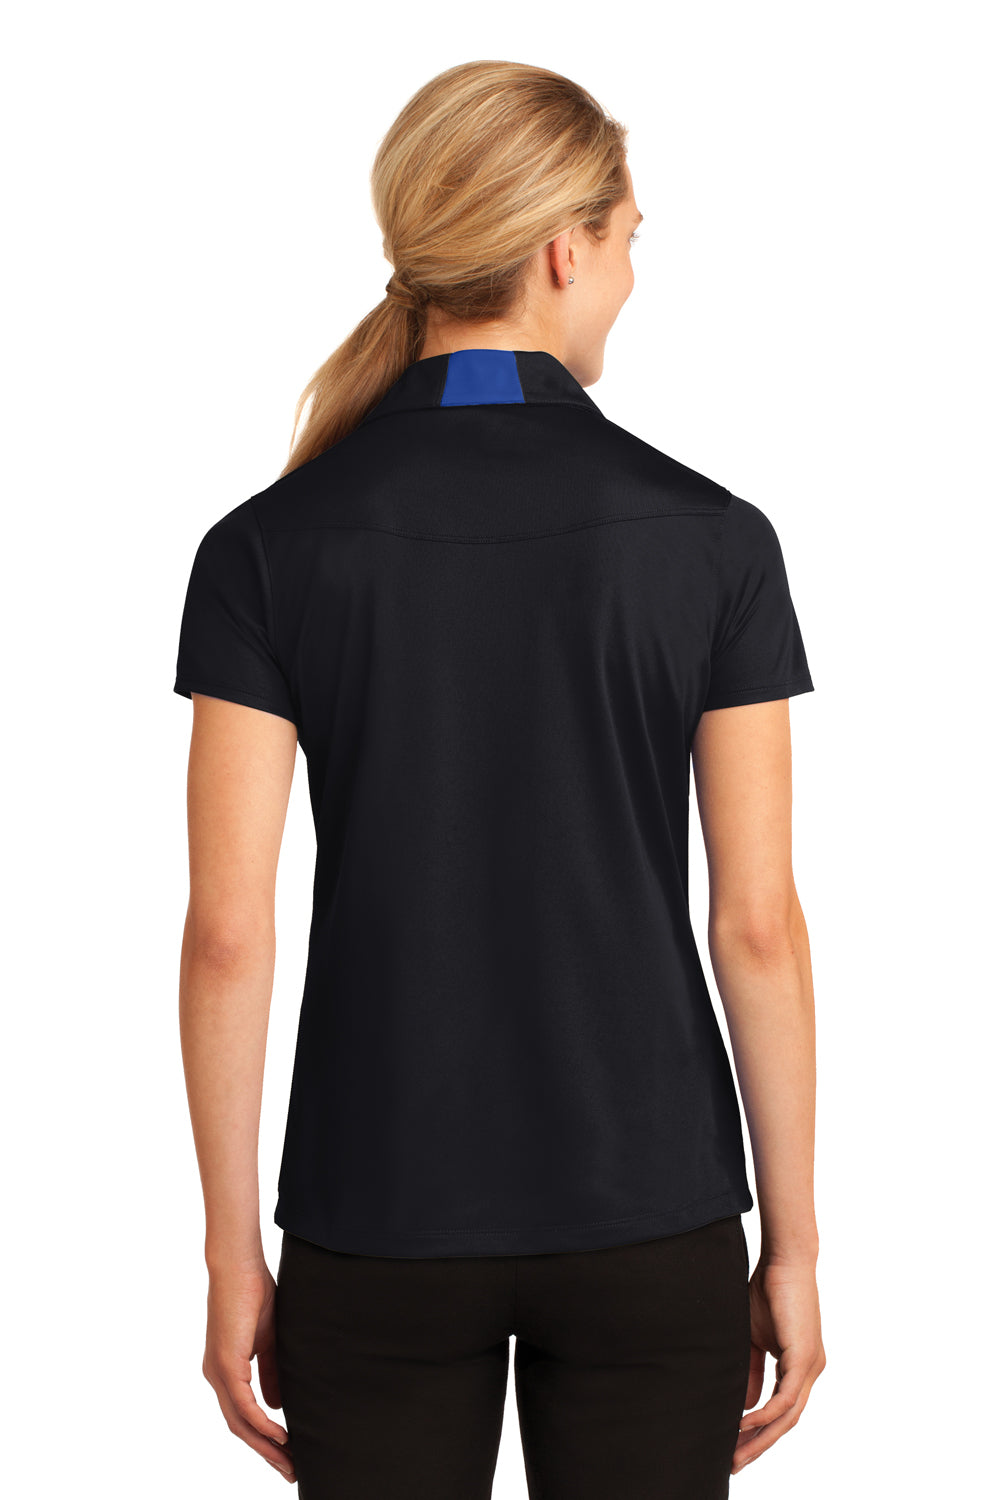 Sport-Tek LST655 Womens Sport-Wick Moisture Wicking Short Sleeve Polo Shirt Black/Royal Blue Back